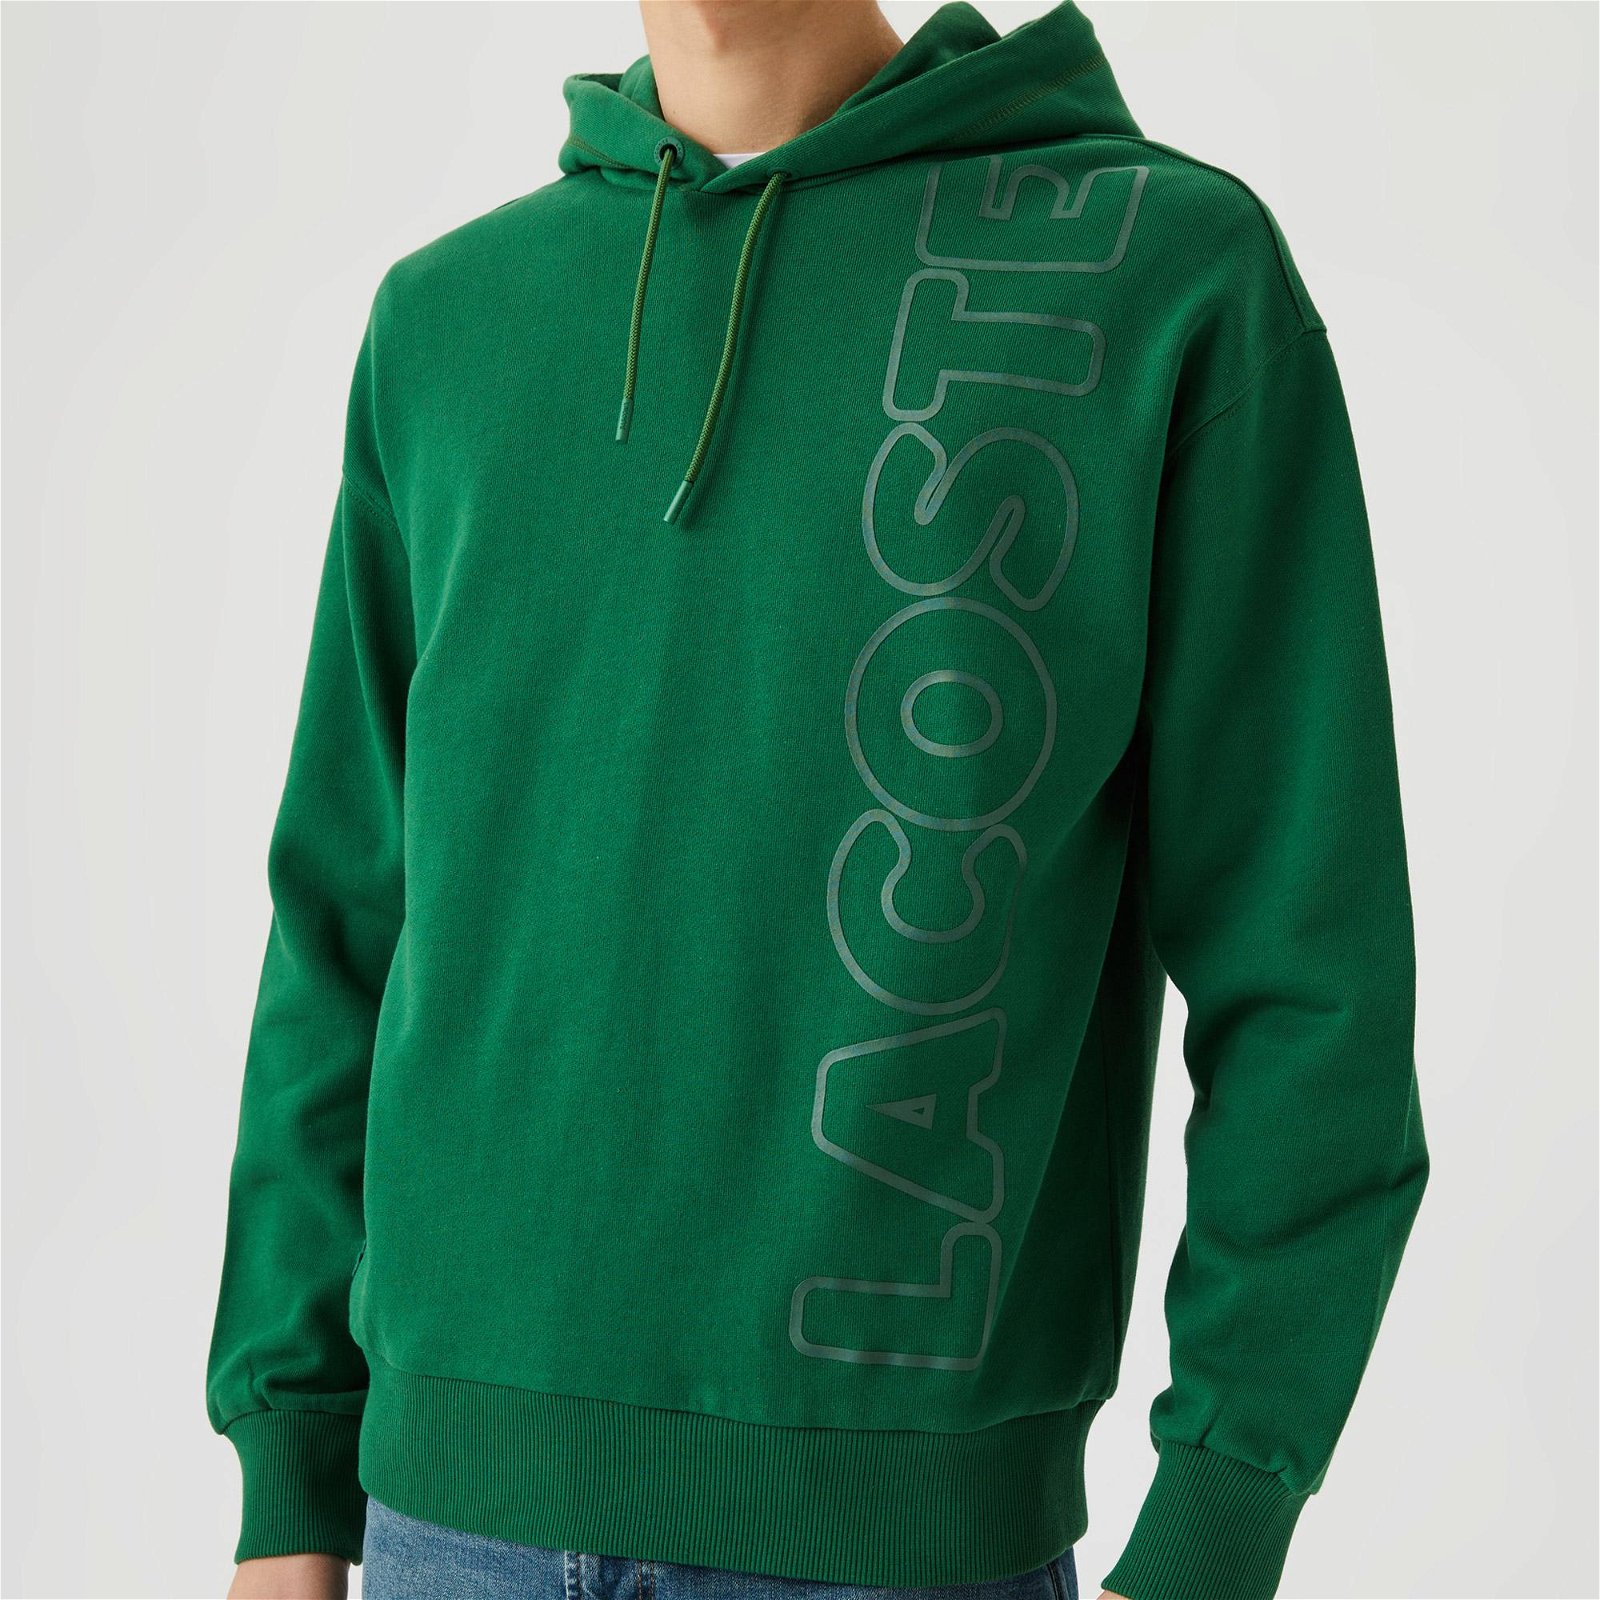 Lacoste Unisex Relax Fit Kapüşonlu Baskılı Yeşil Sweatshirt